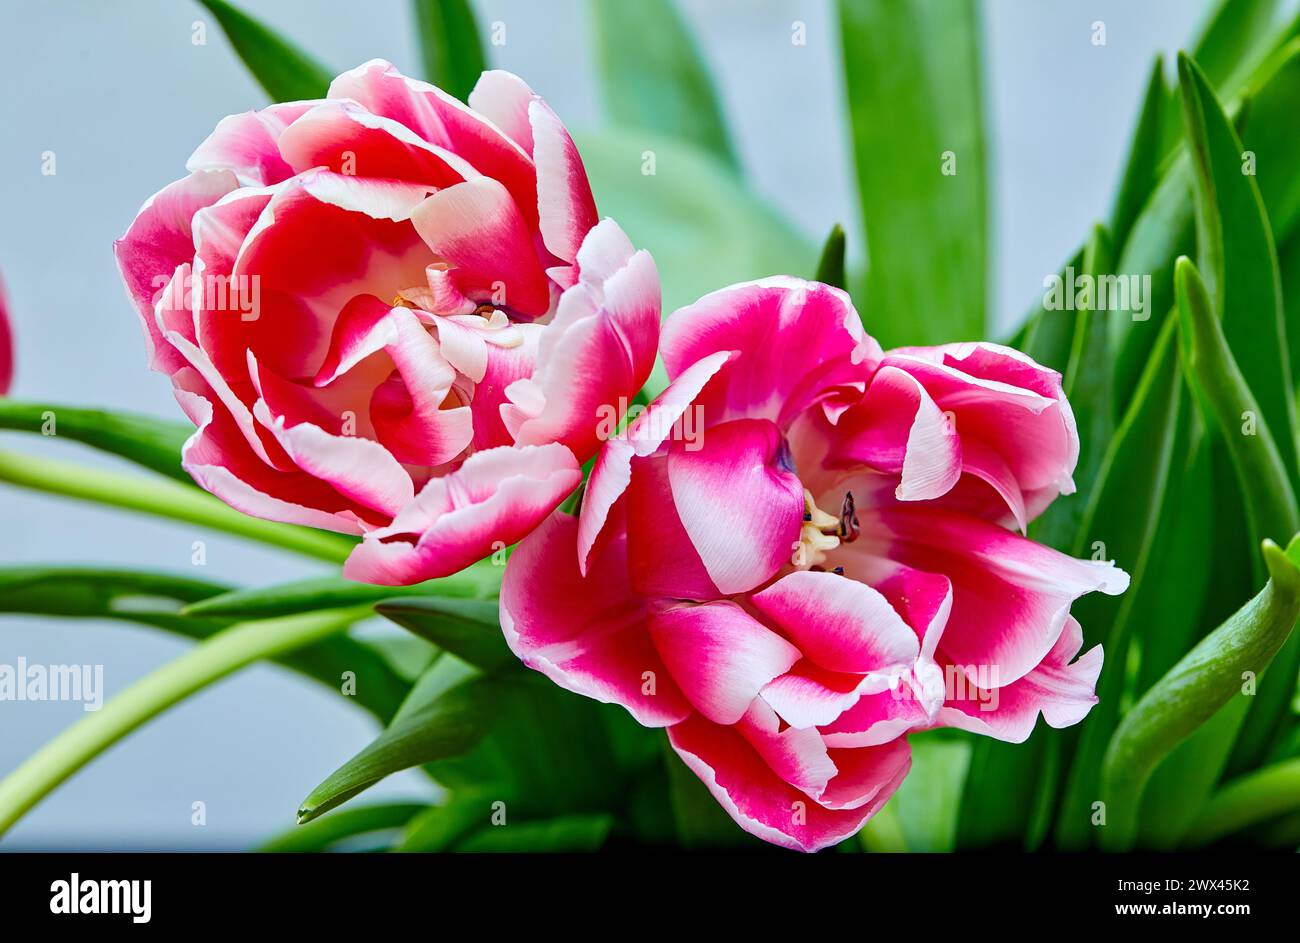 Image of two opened tulip buds pink peony Columbus Stock Photo